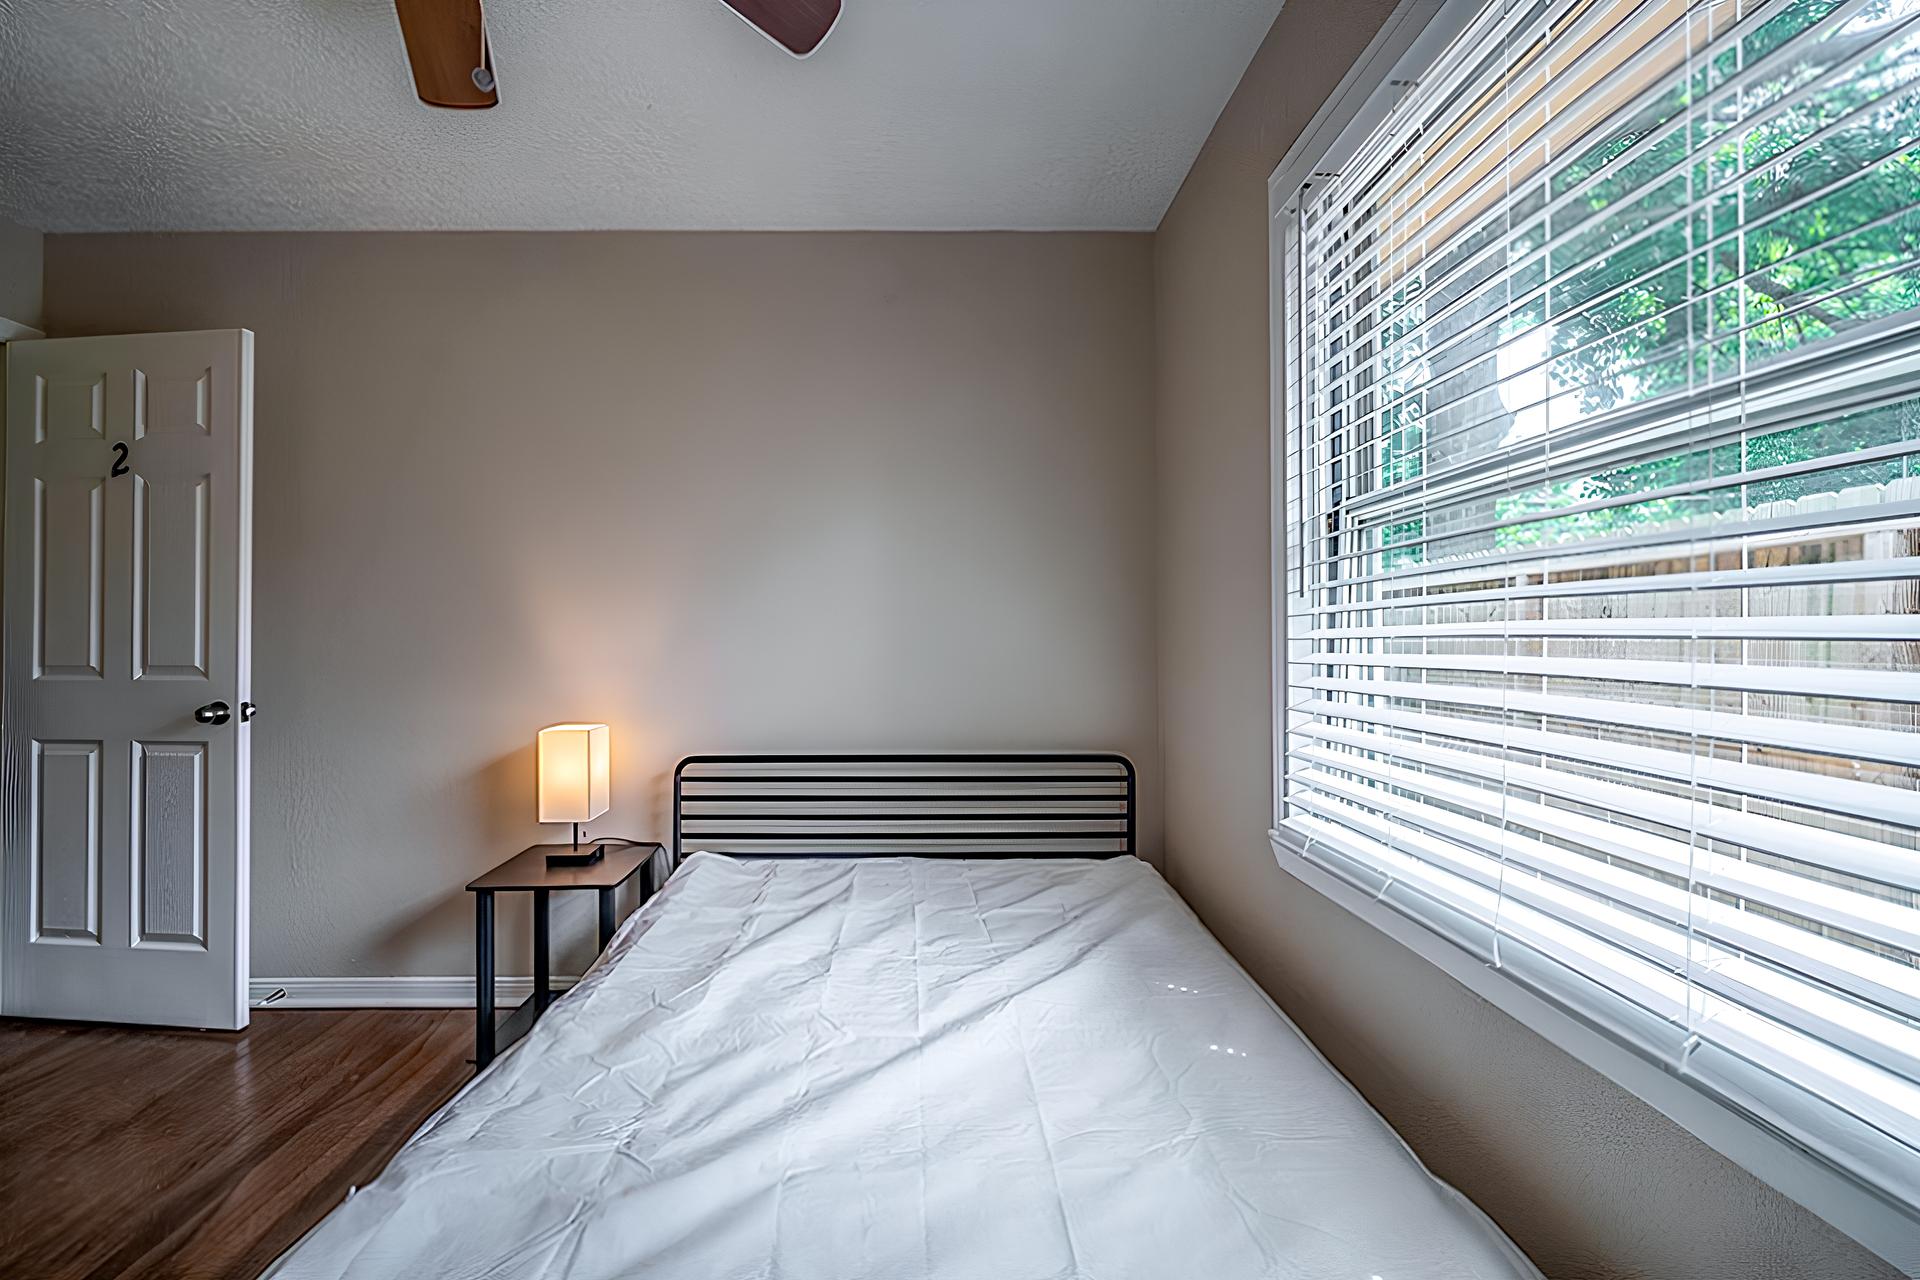 bedroom, detected: bed, window blind, ceiling fan